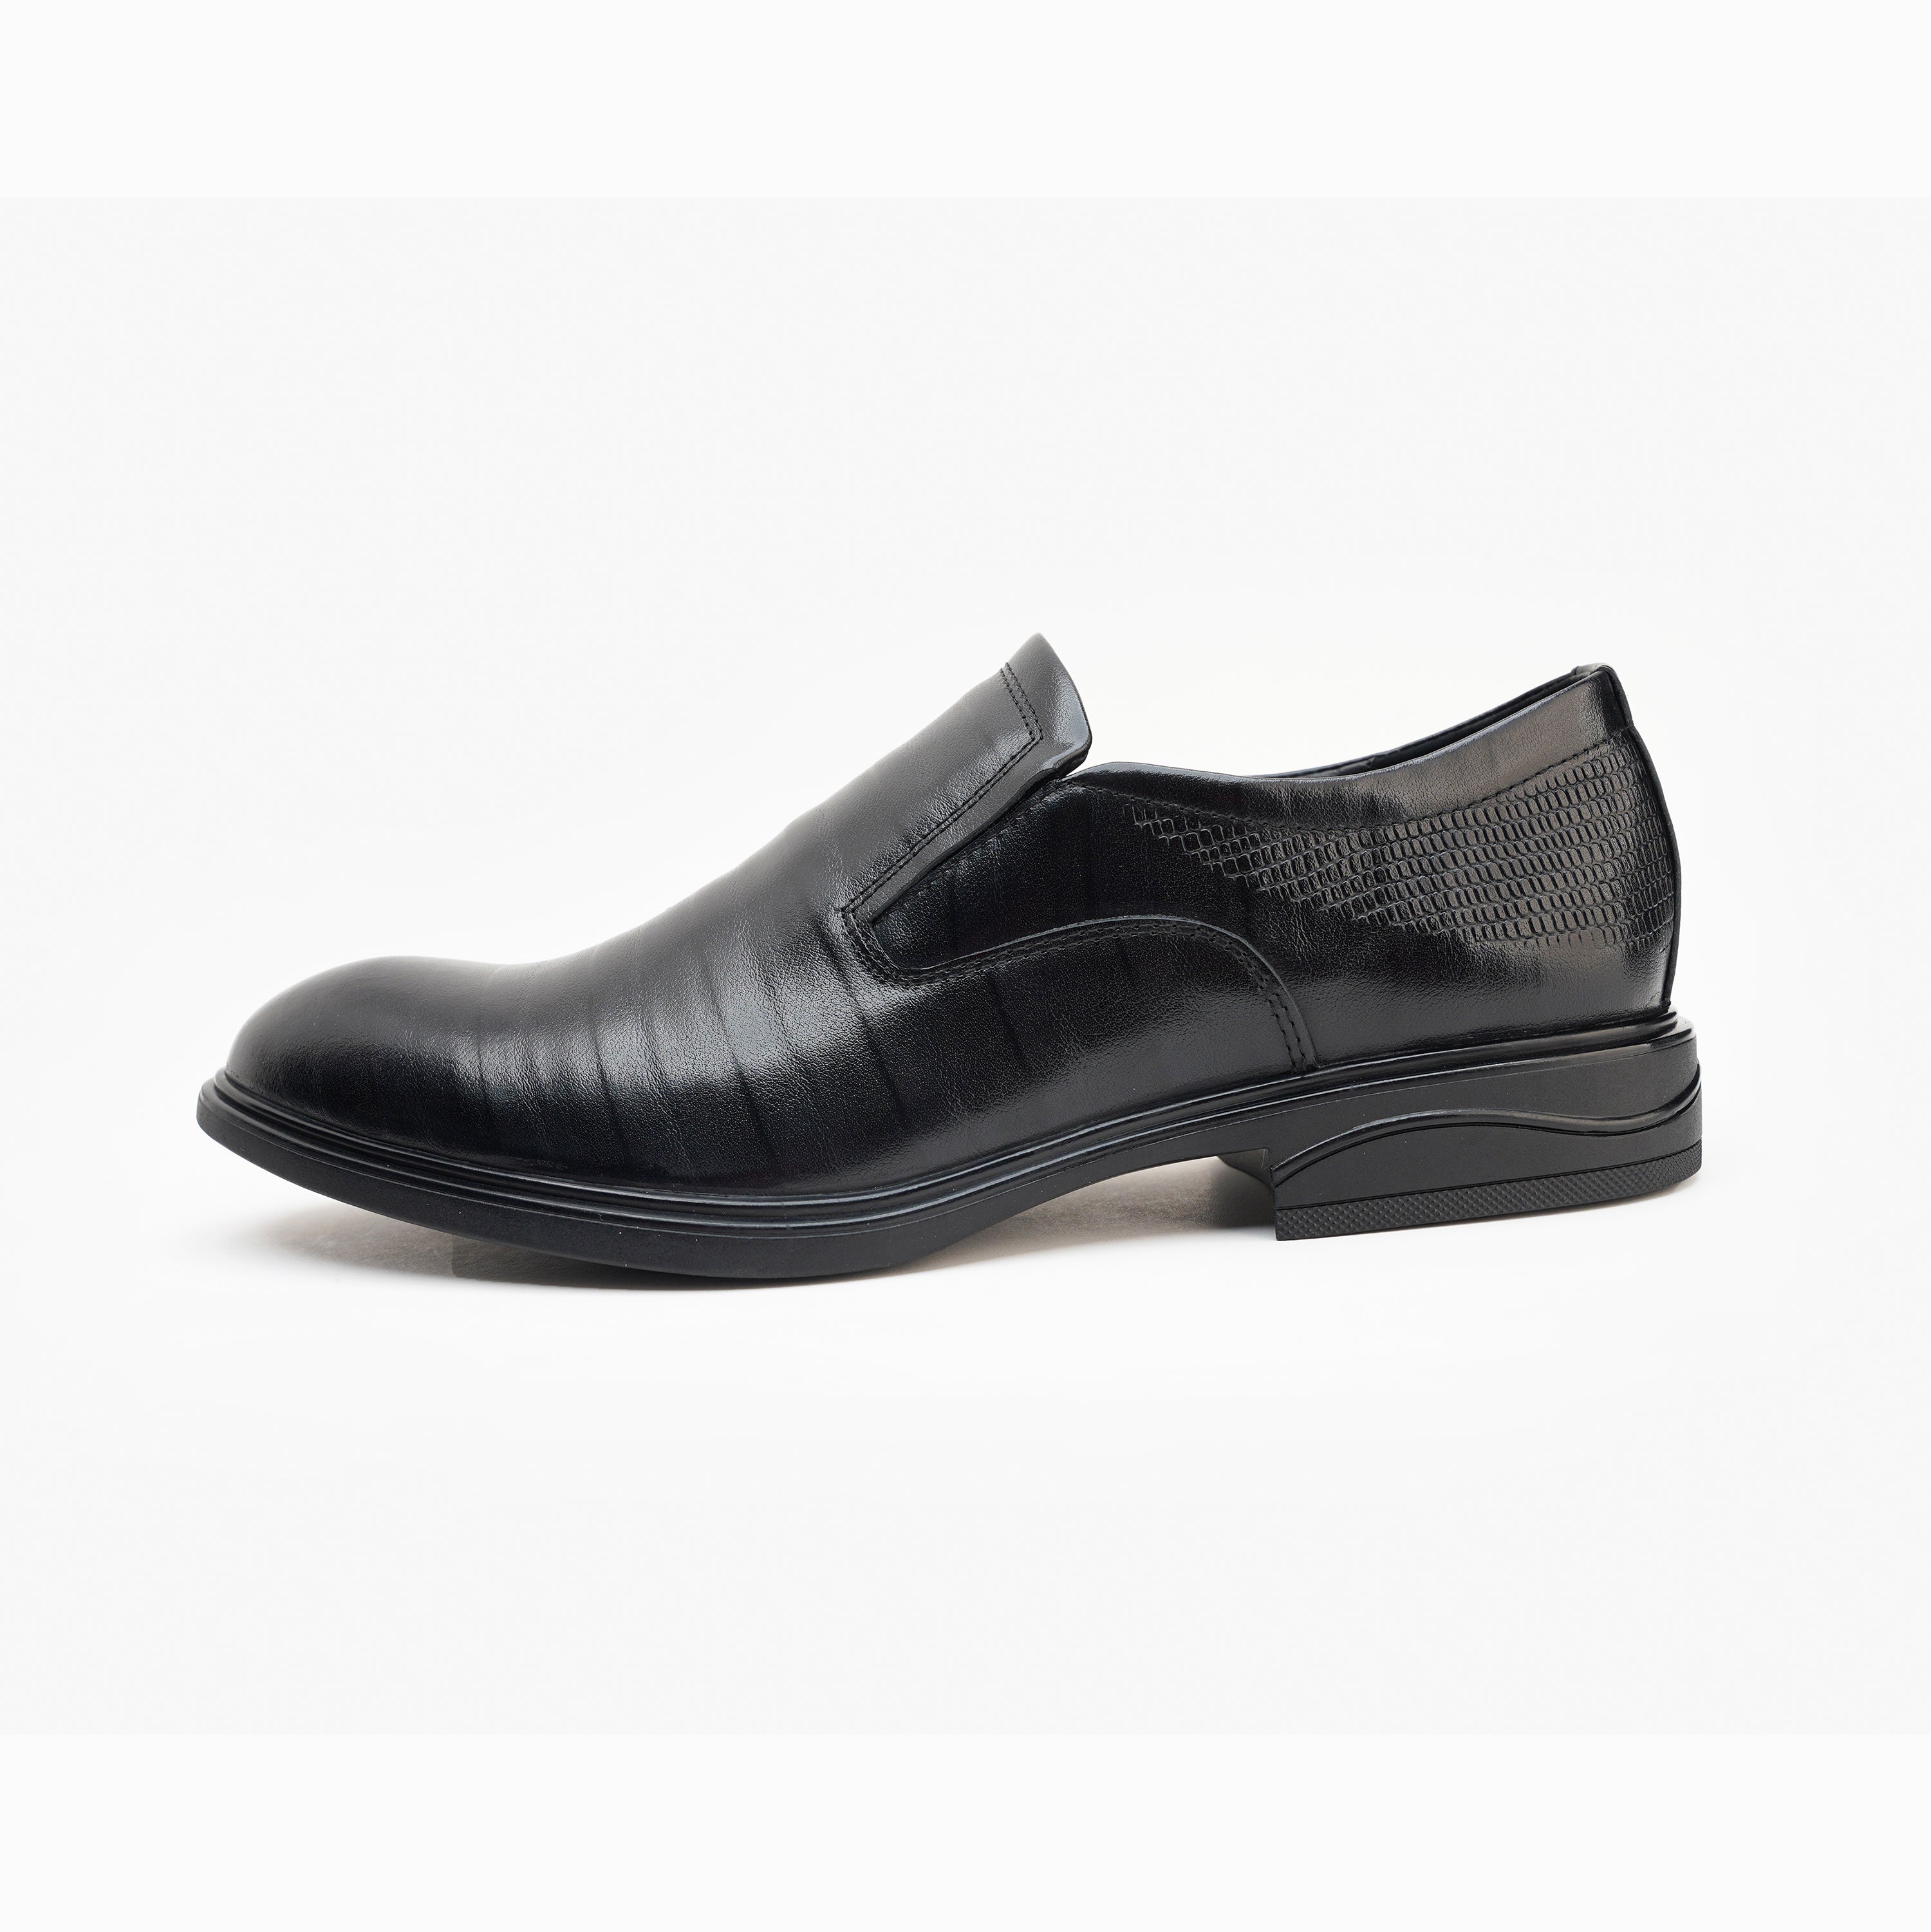 24078-Black Formal Genuine Cow Leather Oxford for Men Slip On Round Burnished Non Slip Low Top Slip Resistant Walking